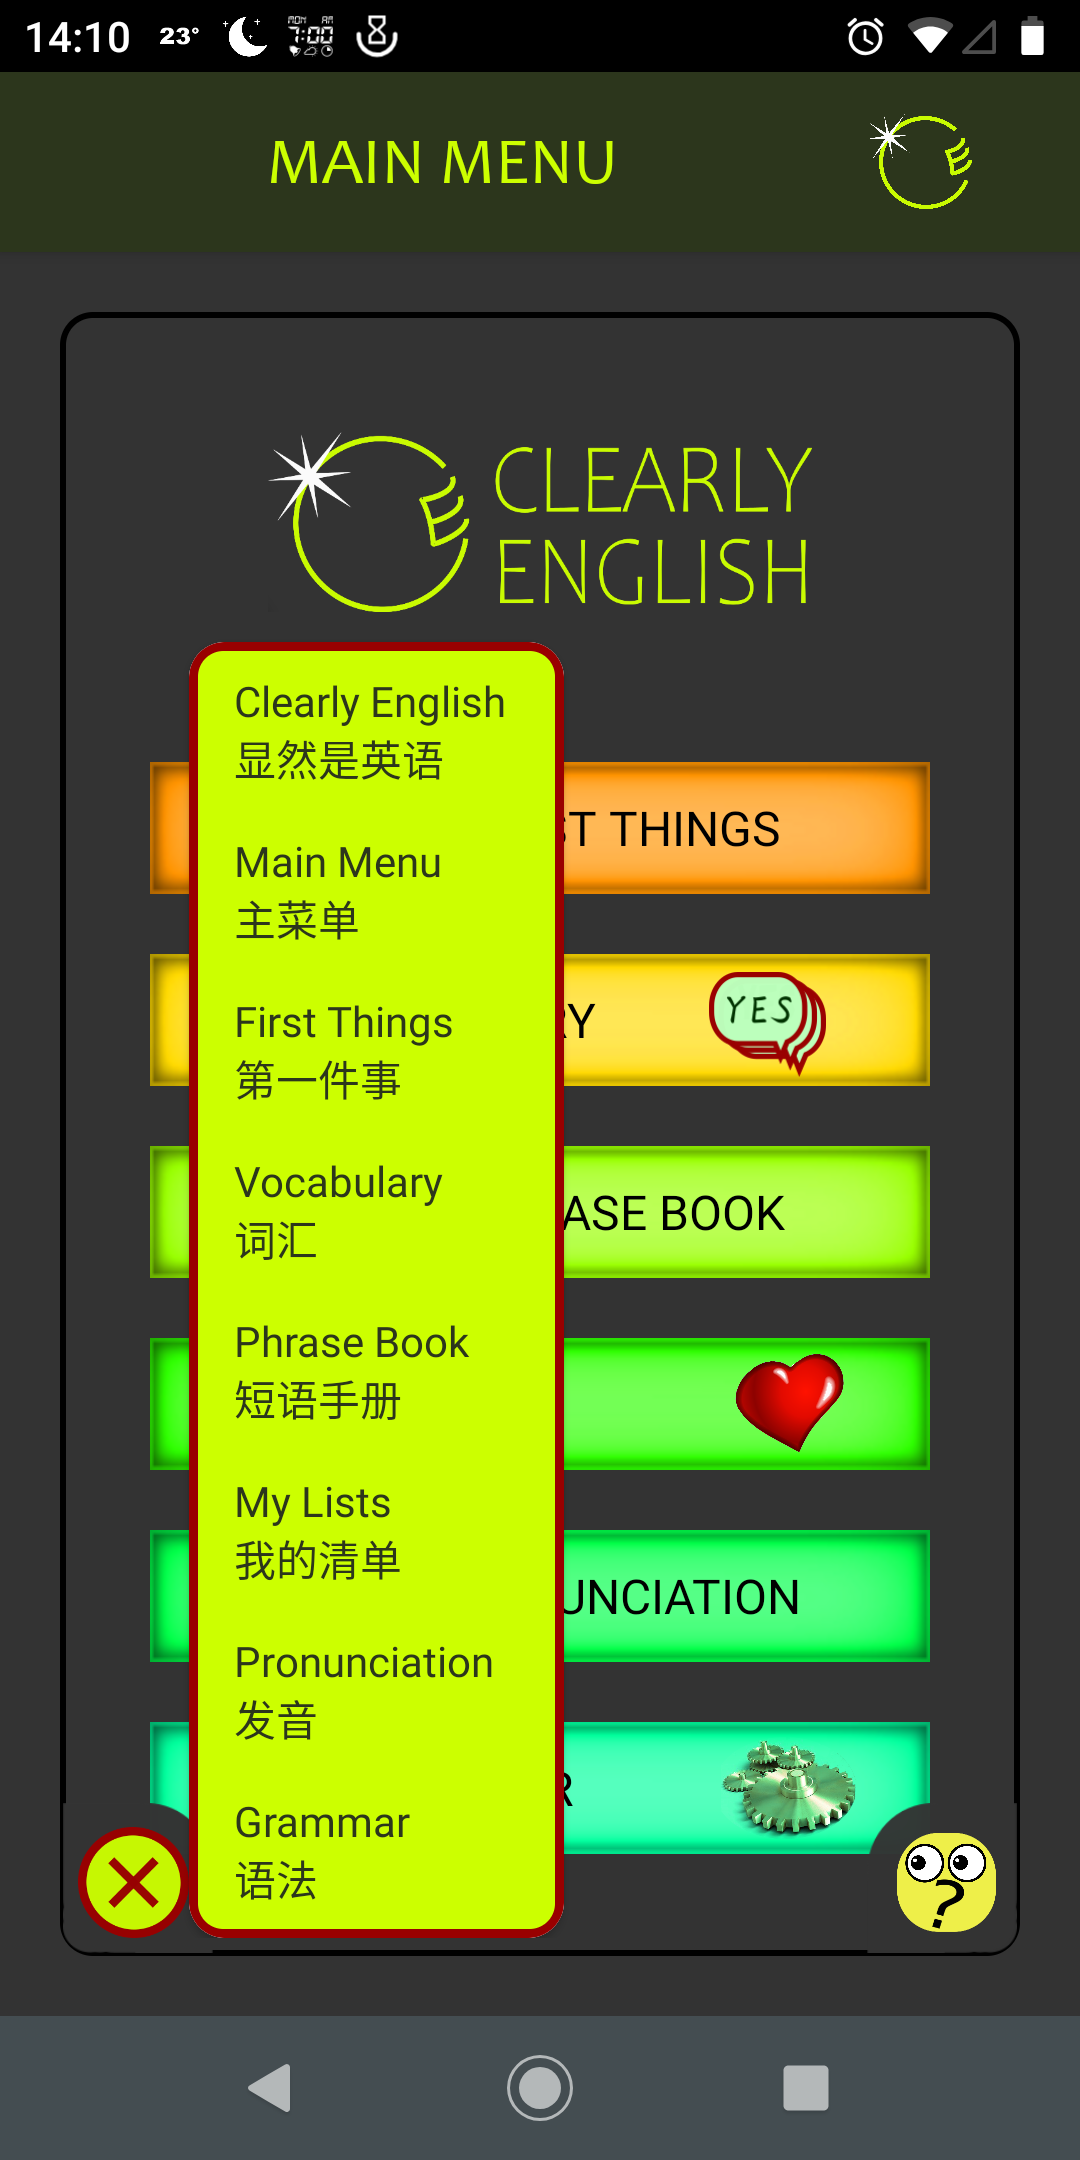 Pop-up screen translation box